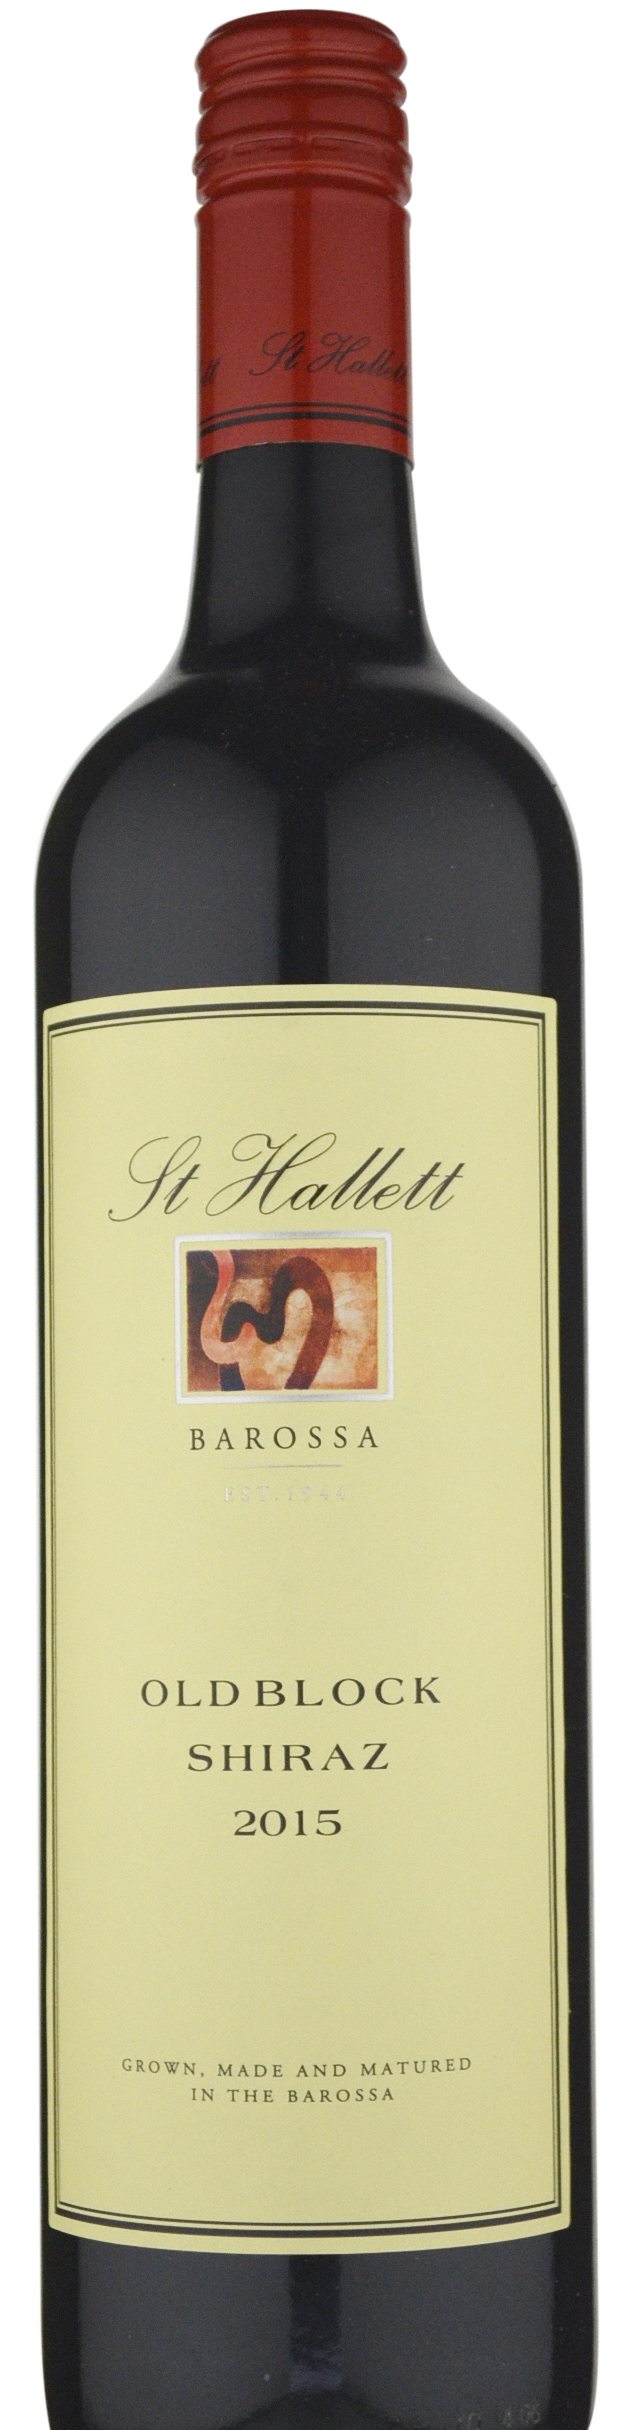 St hallett wyncroft single vineyard shiraz